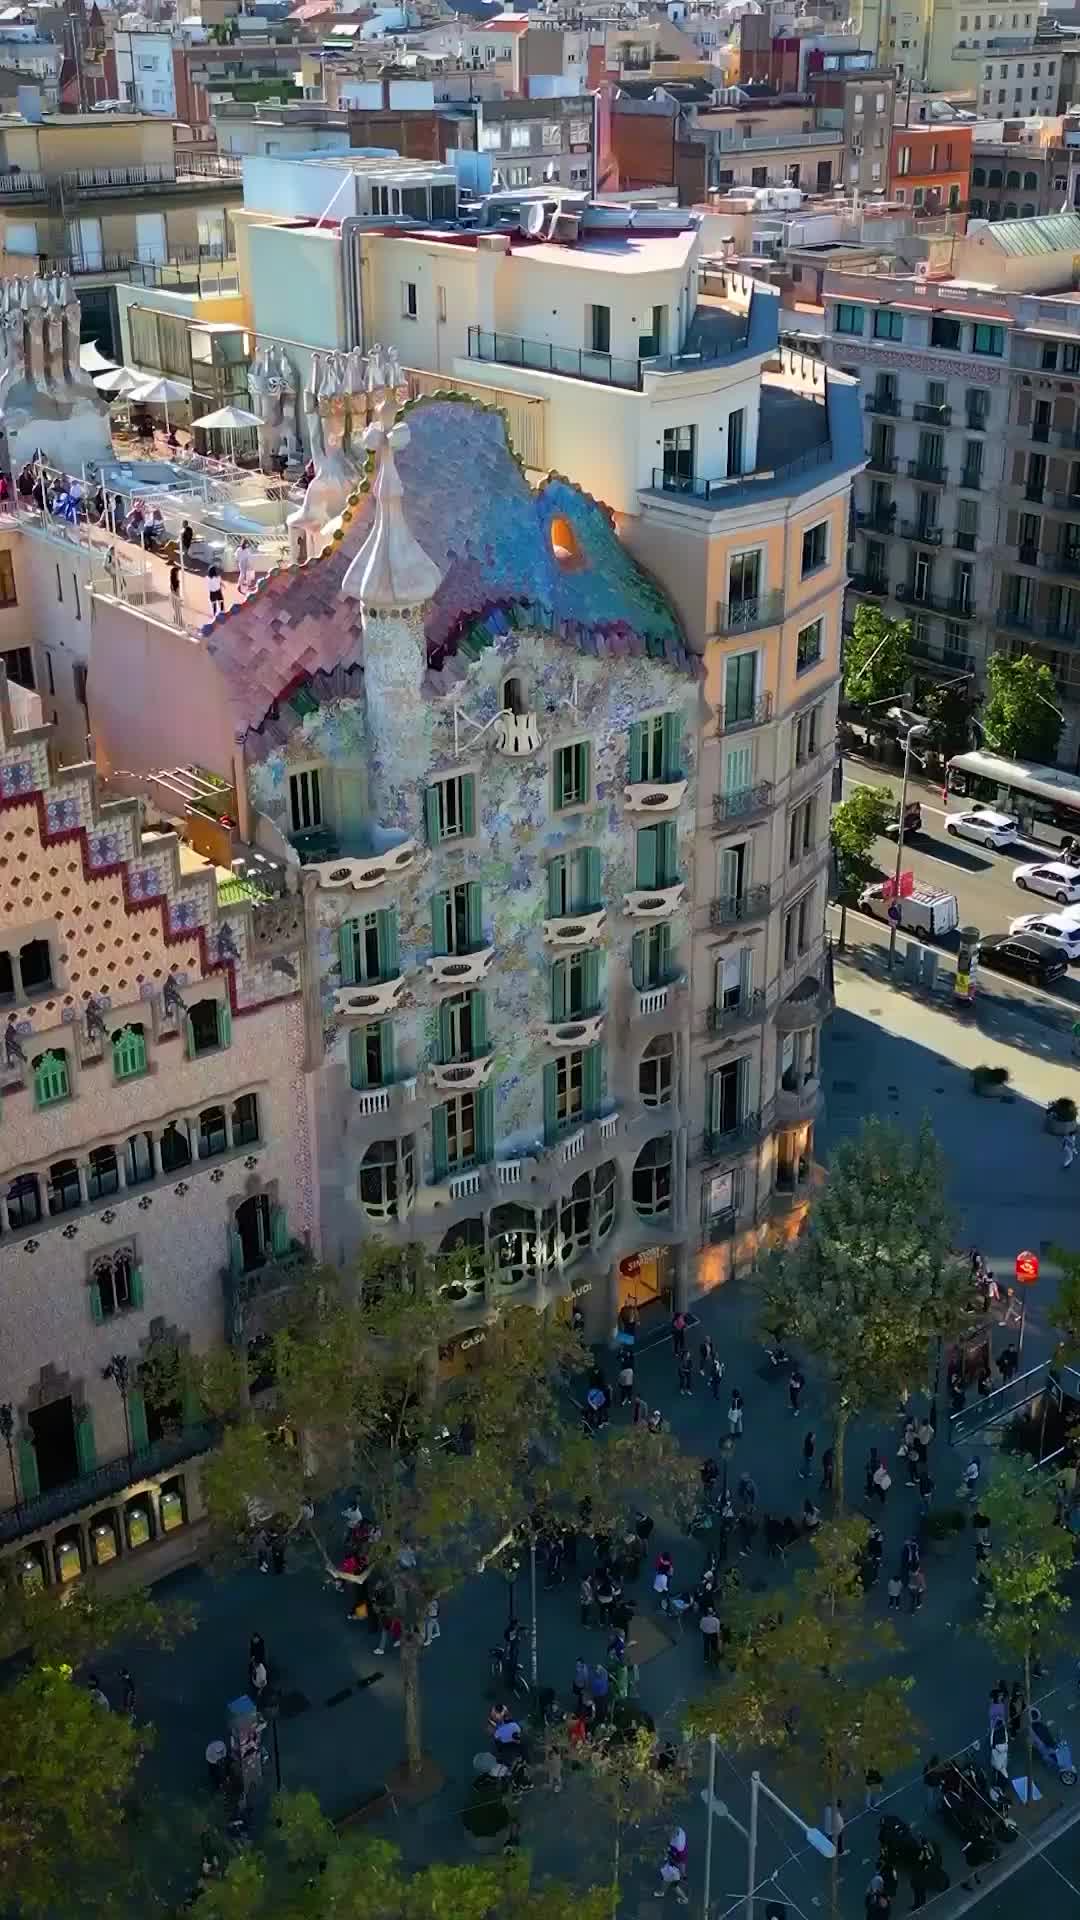 Discover Casa Batlló: Gaudí’s Masterpiece in Barcelona